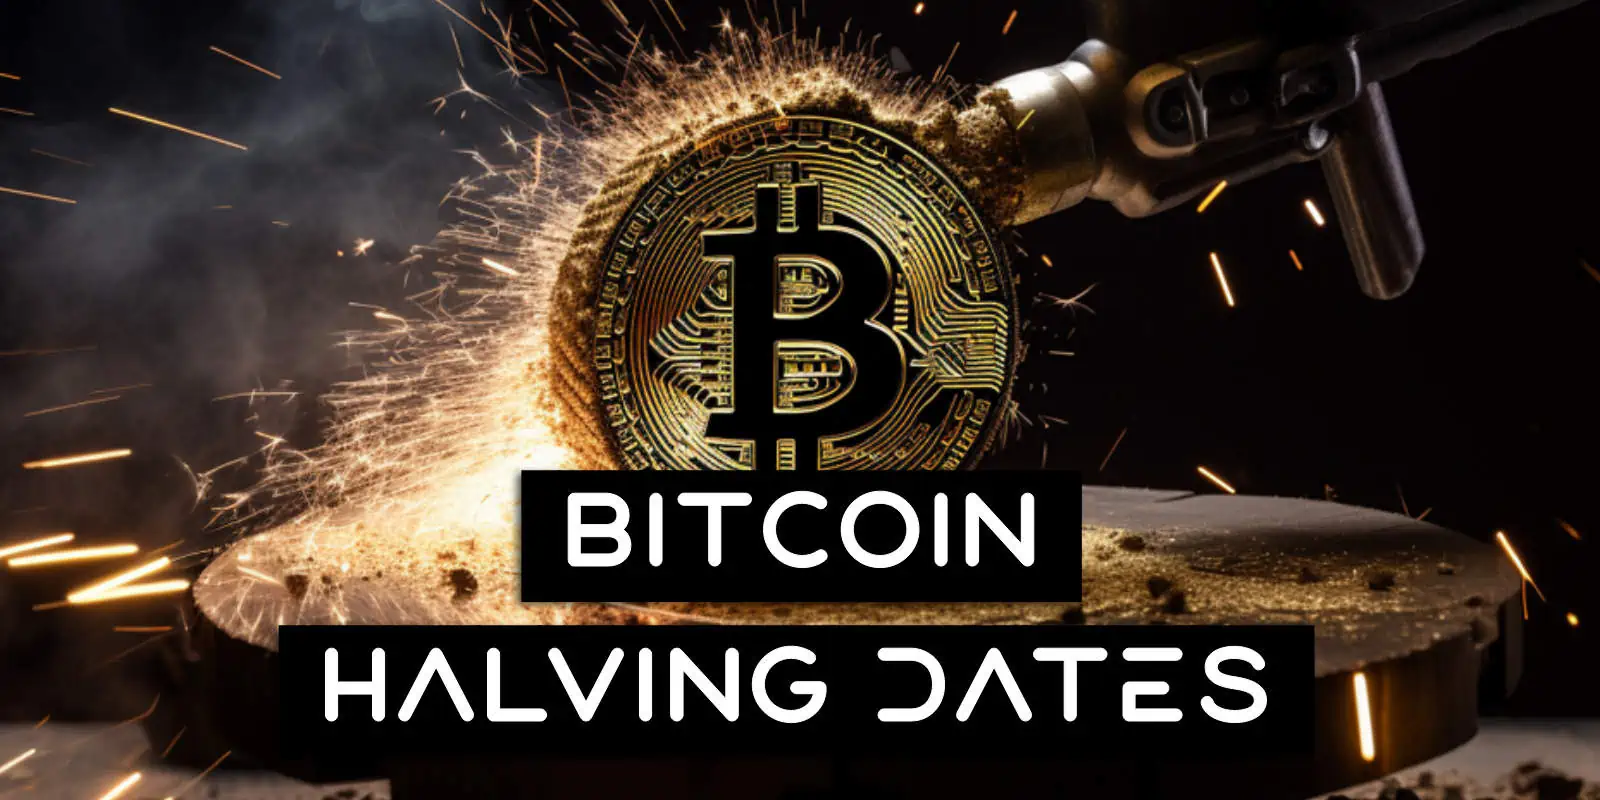 Bitcoin Halving Dates